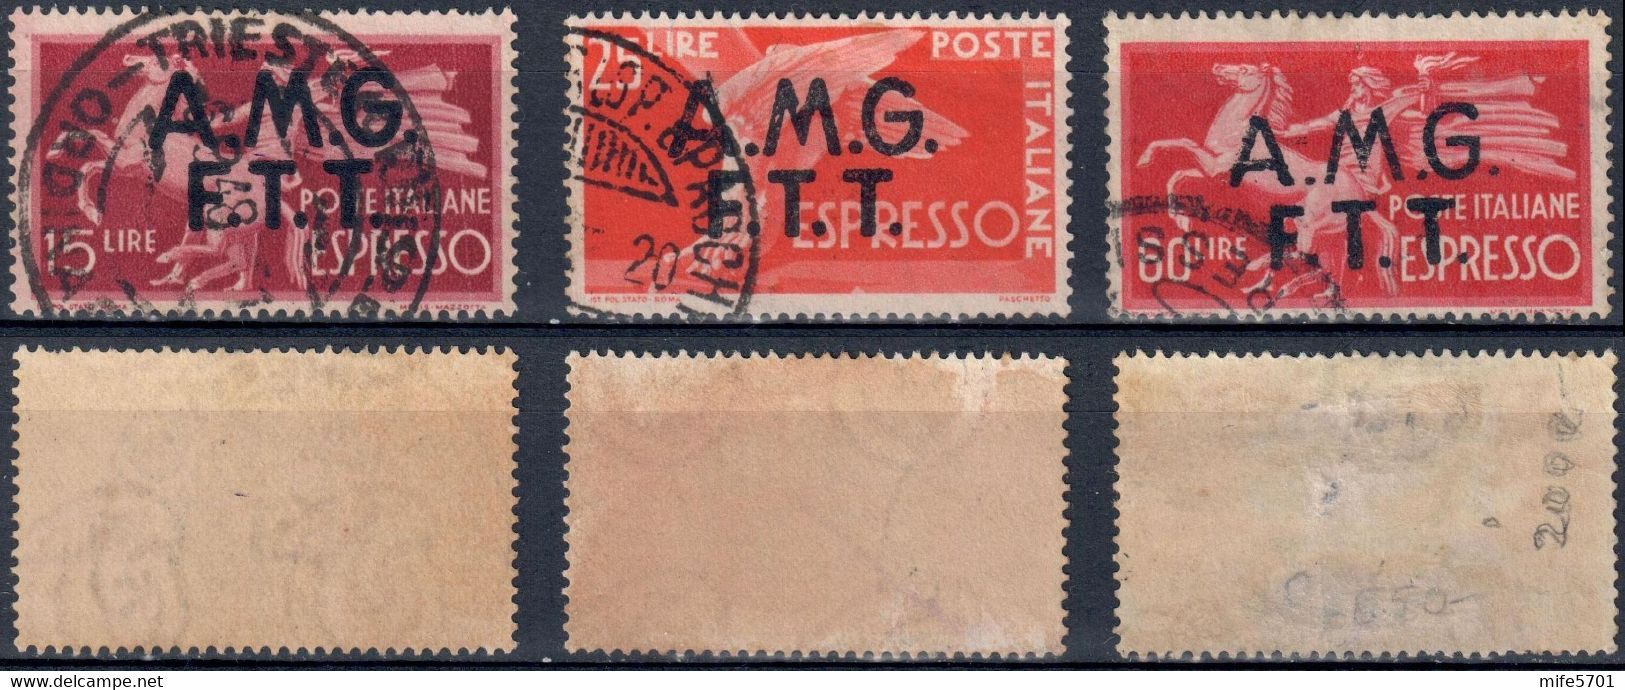 AMG-FTT 1947/48 - ESPRESSI SERIE DEMOCRATICA L. 15 / 25 / 60 SOPRASTAMPA SU DUE RIGHE - USATI - USED ⦿ - SASSONE 1/2/4 - Poste Exprèsse